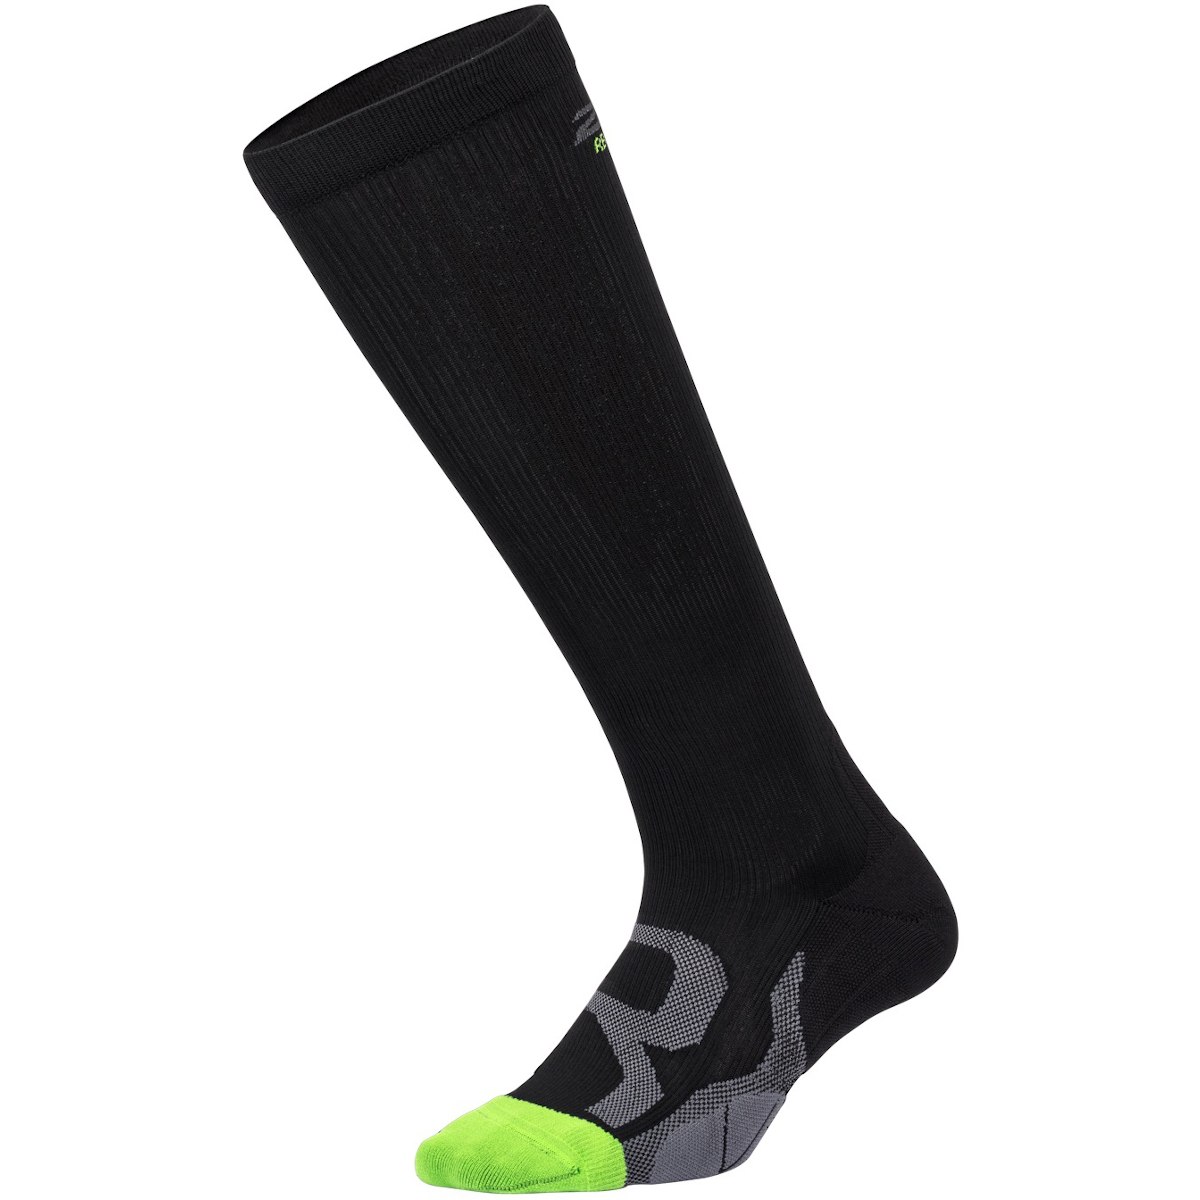 Produktbild von 2XU Compression Socks for Recovery - schmal - black